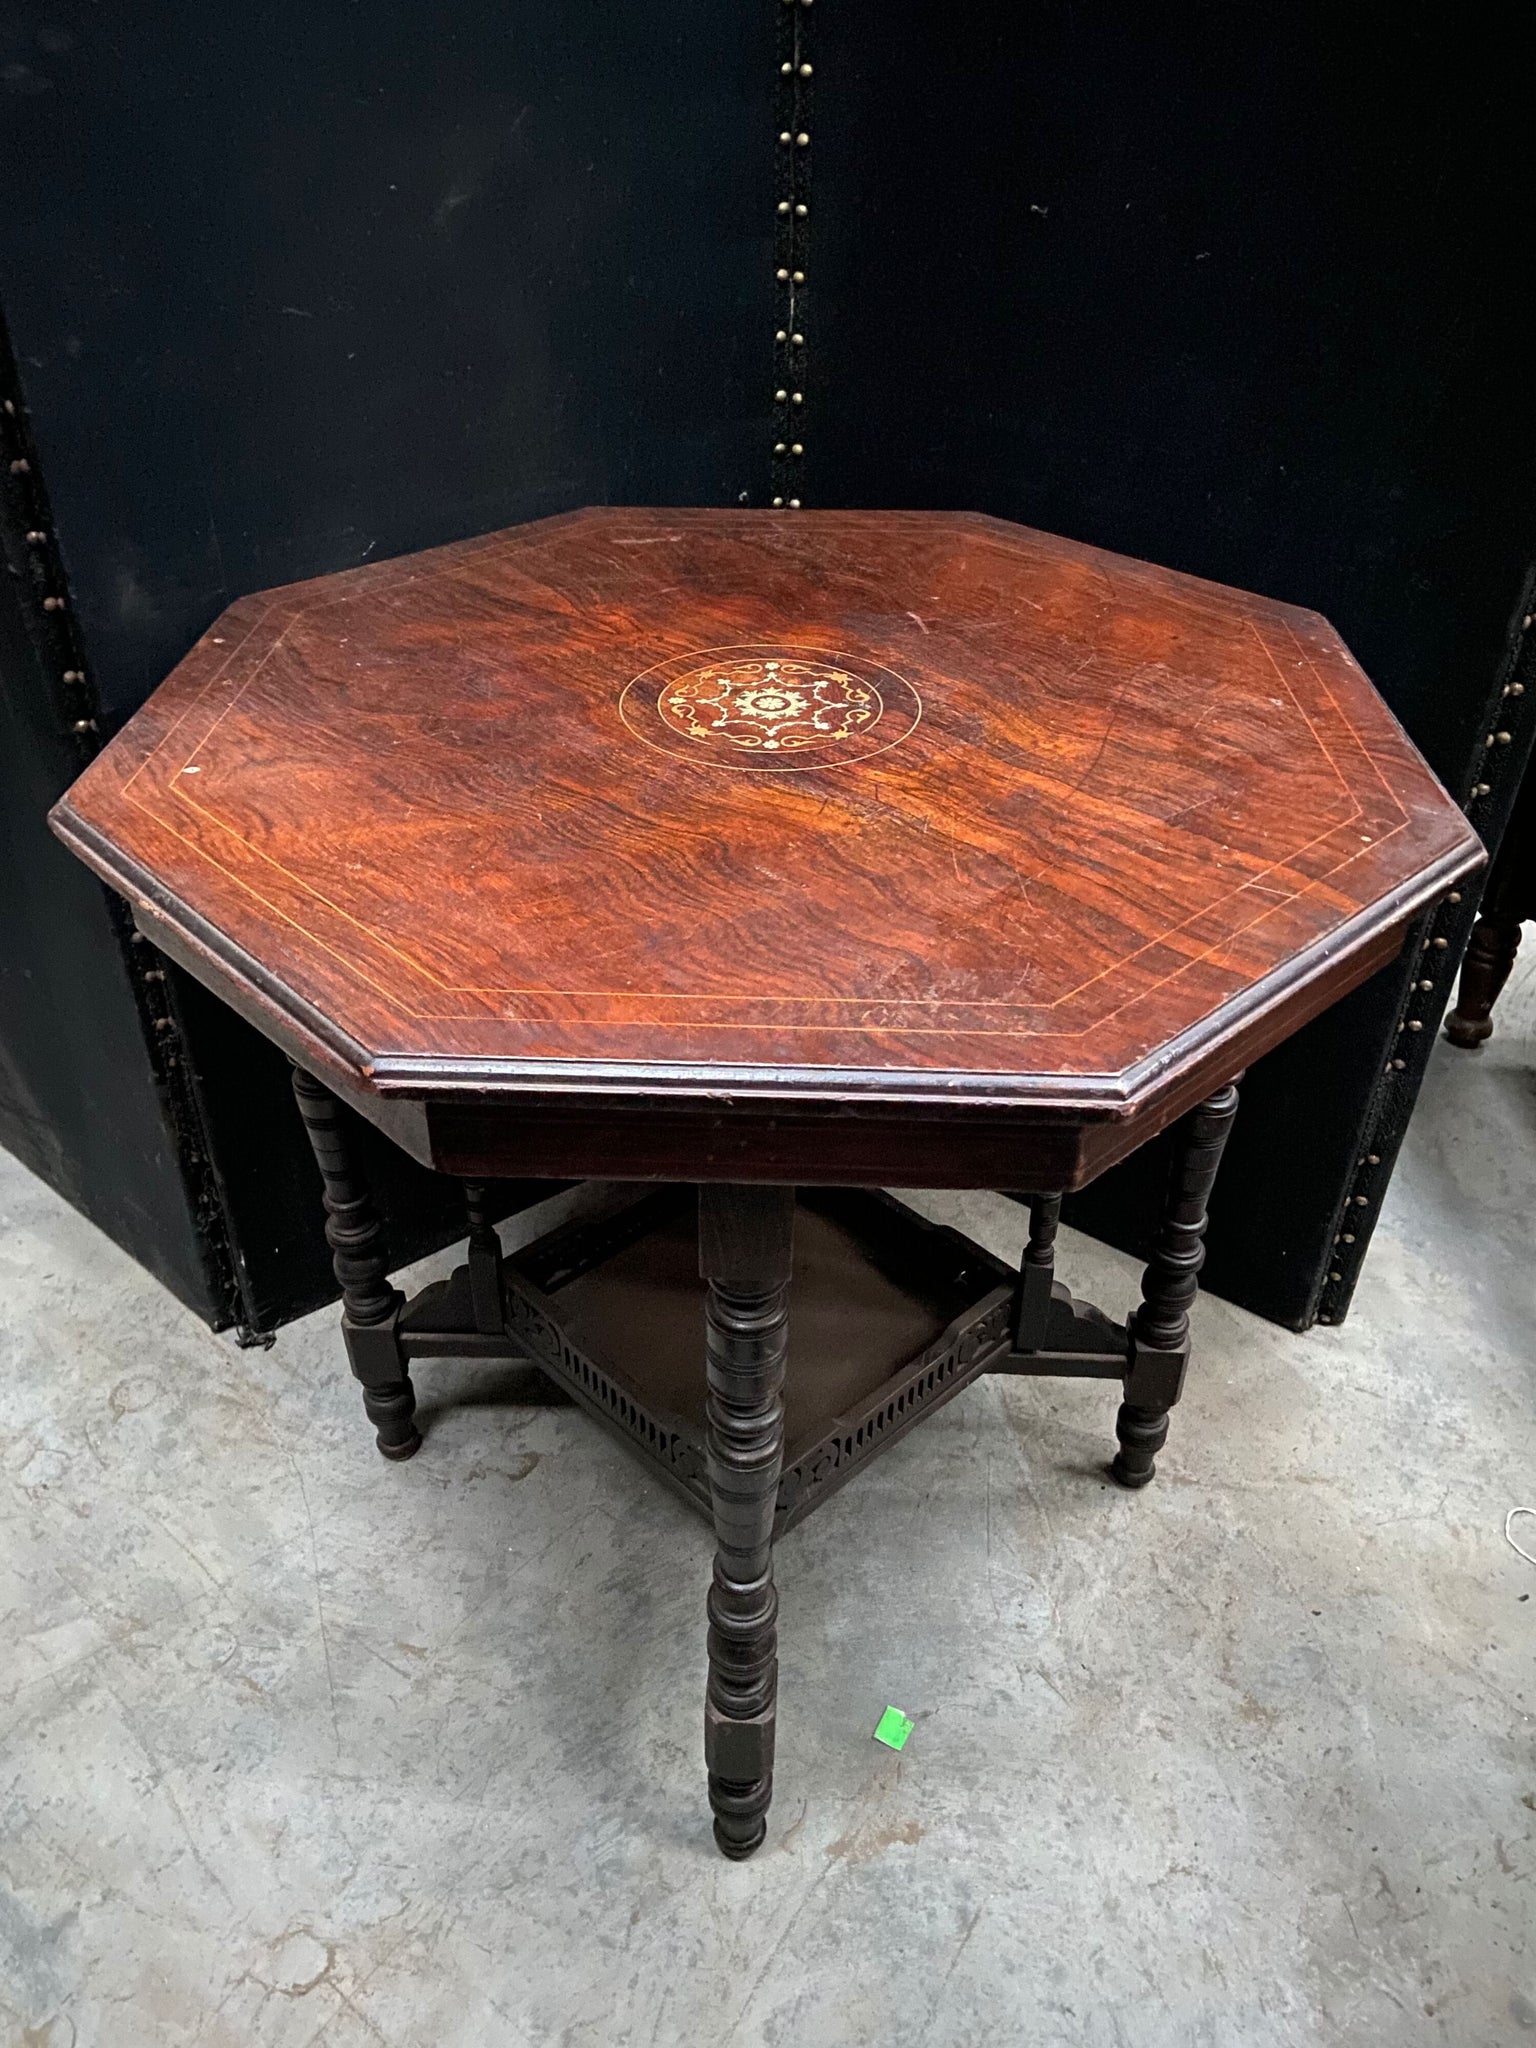 Octagonal Wooden Table